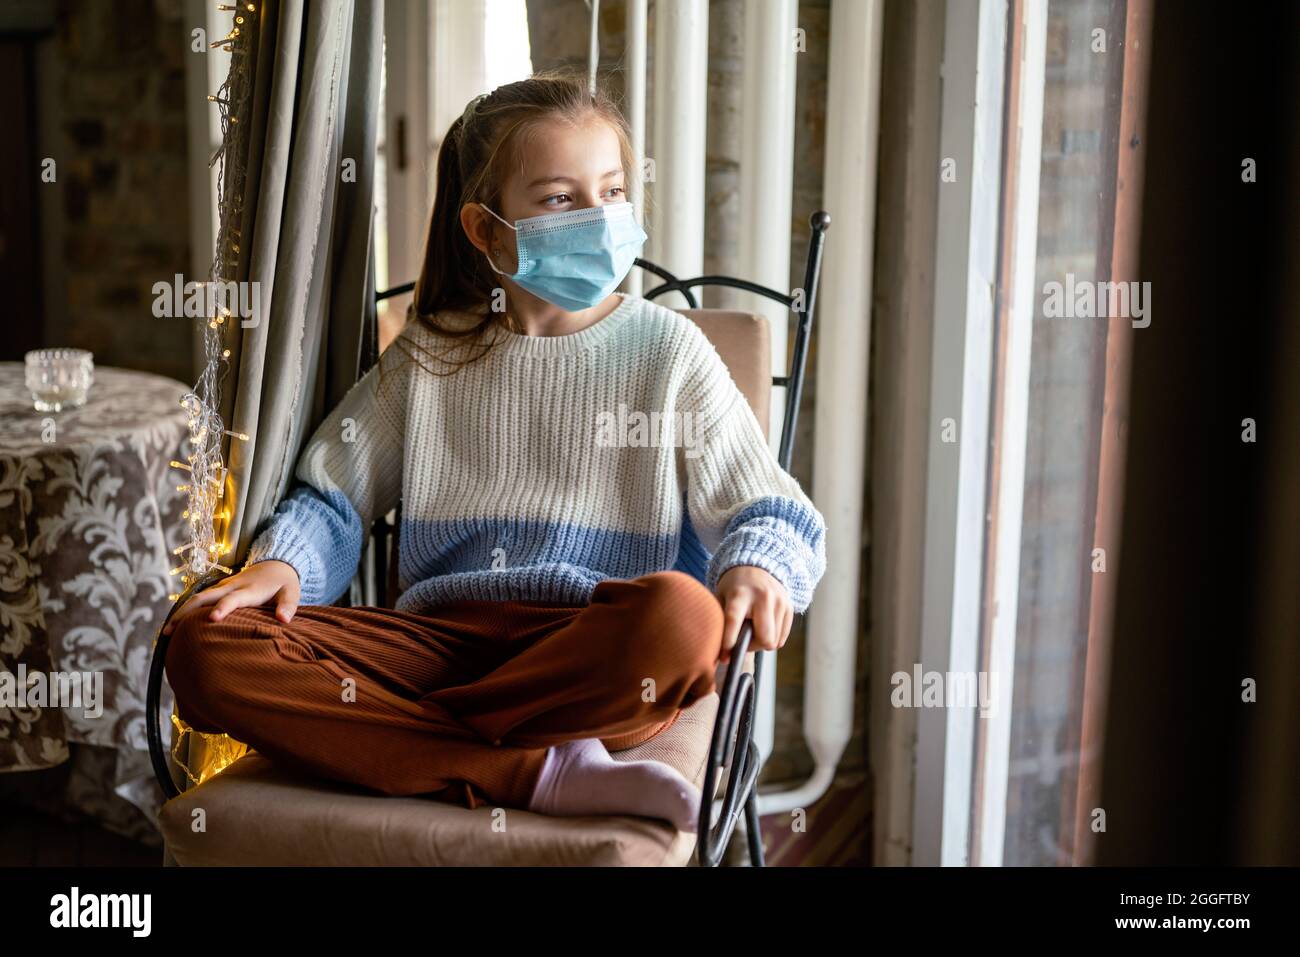 Sad child girl wearing protective mask at home. People coronavirus quarantine concept Stock Photo